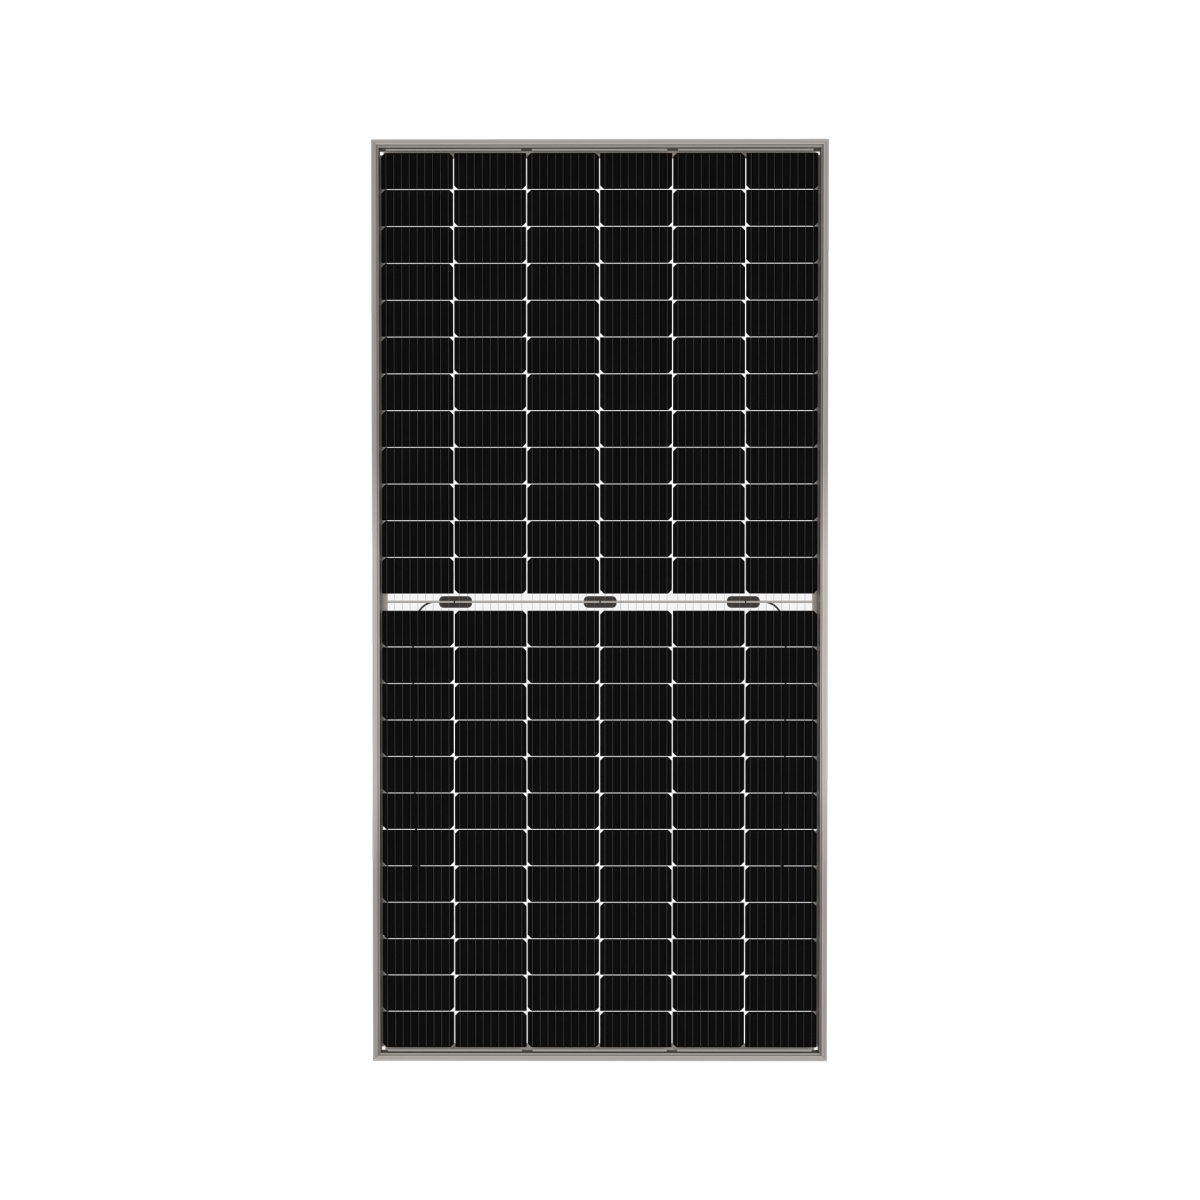 TommaTech 445 Watt 144 Percmono Bifazial Half-Cut Multi Busbar Solarpanel